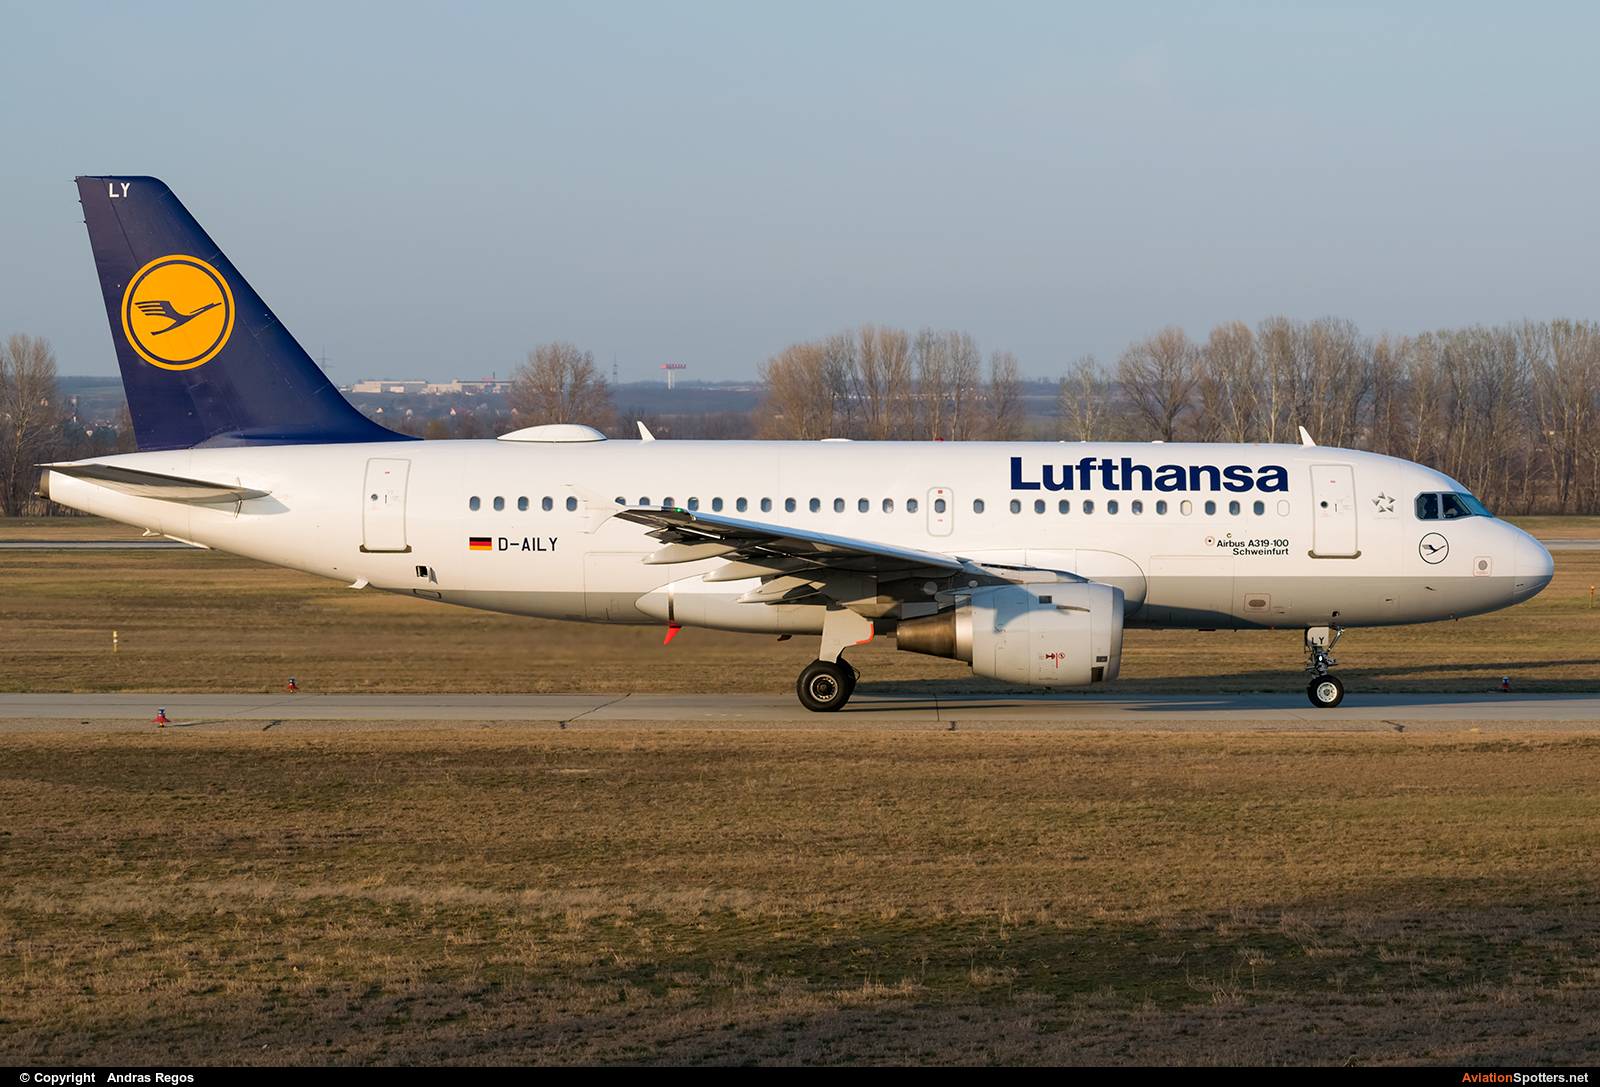 Lufthansa  -  A319-114  (D-AILY) By Andras Regos (regos)